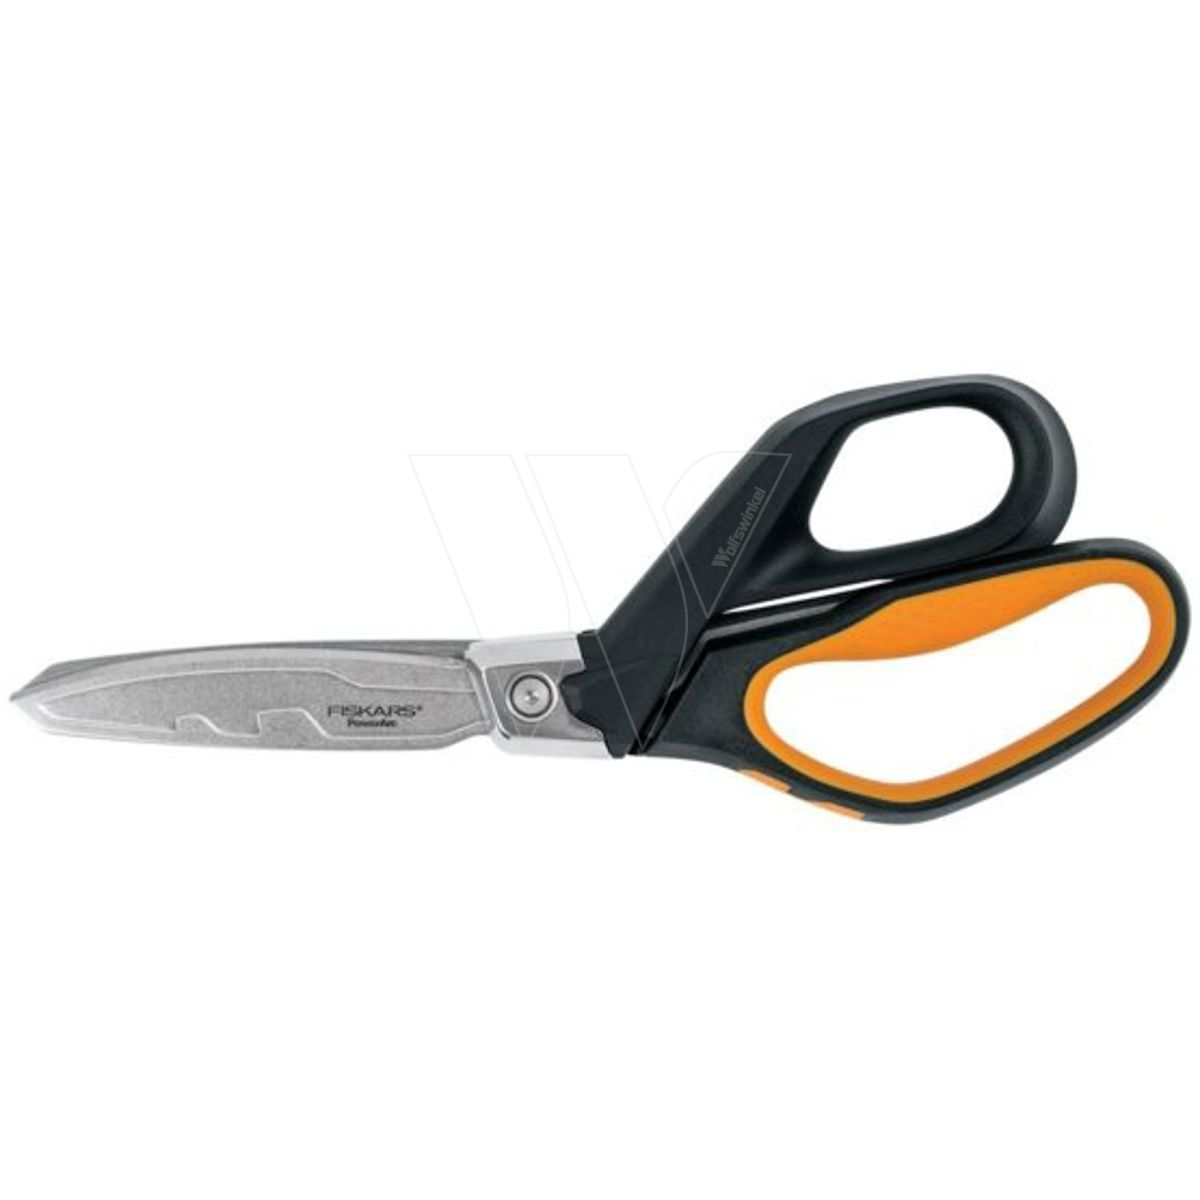 Fiskars powerarc heavy duty scissors 26 cm